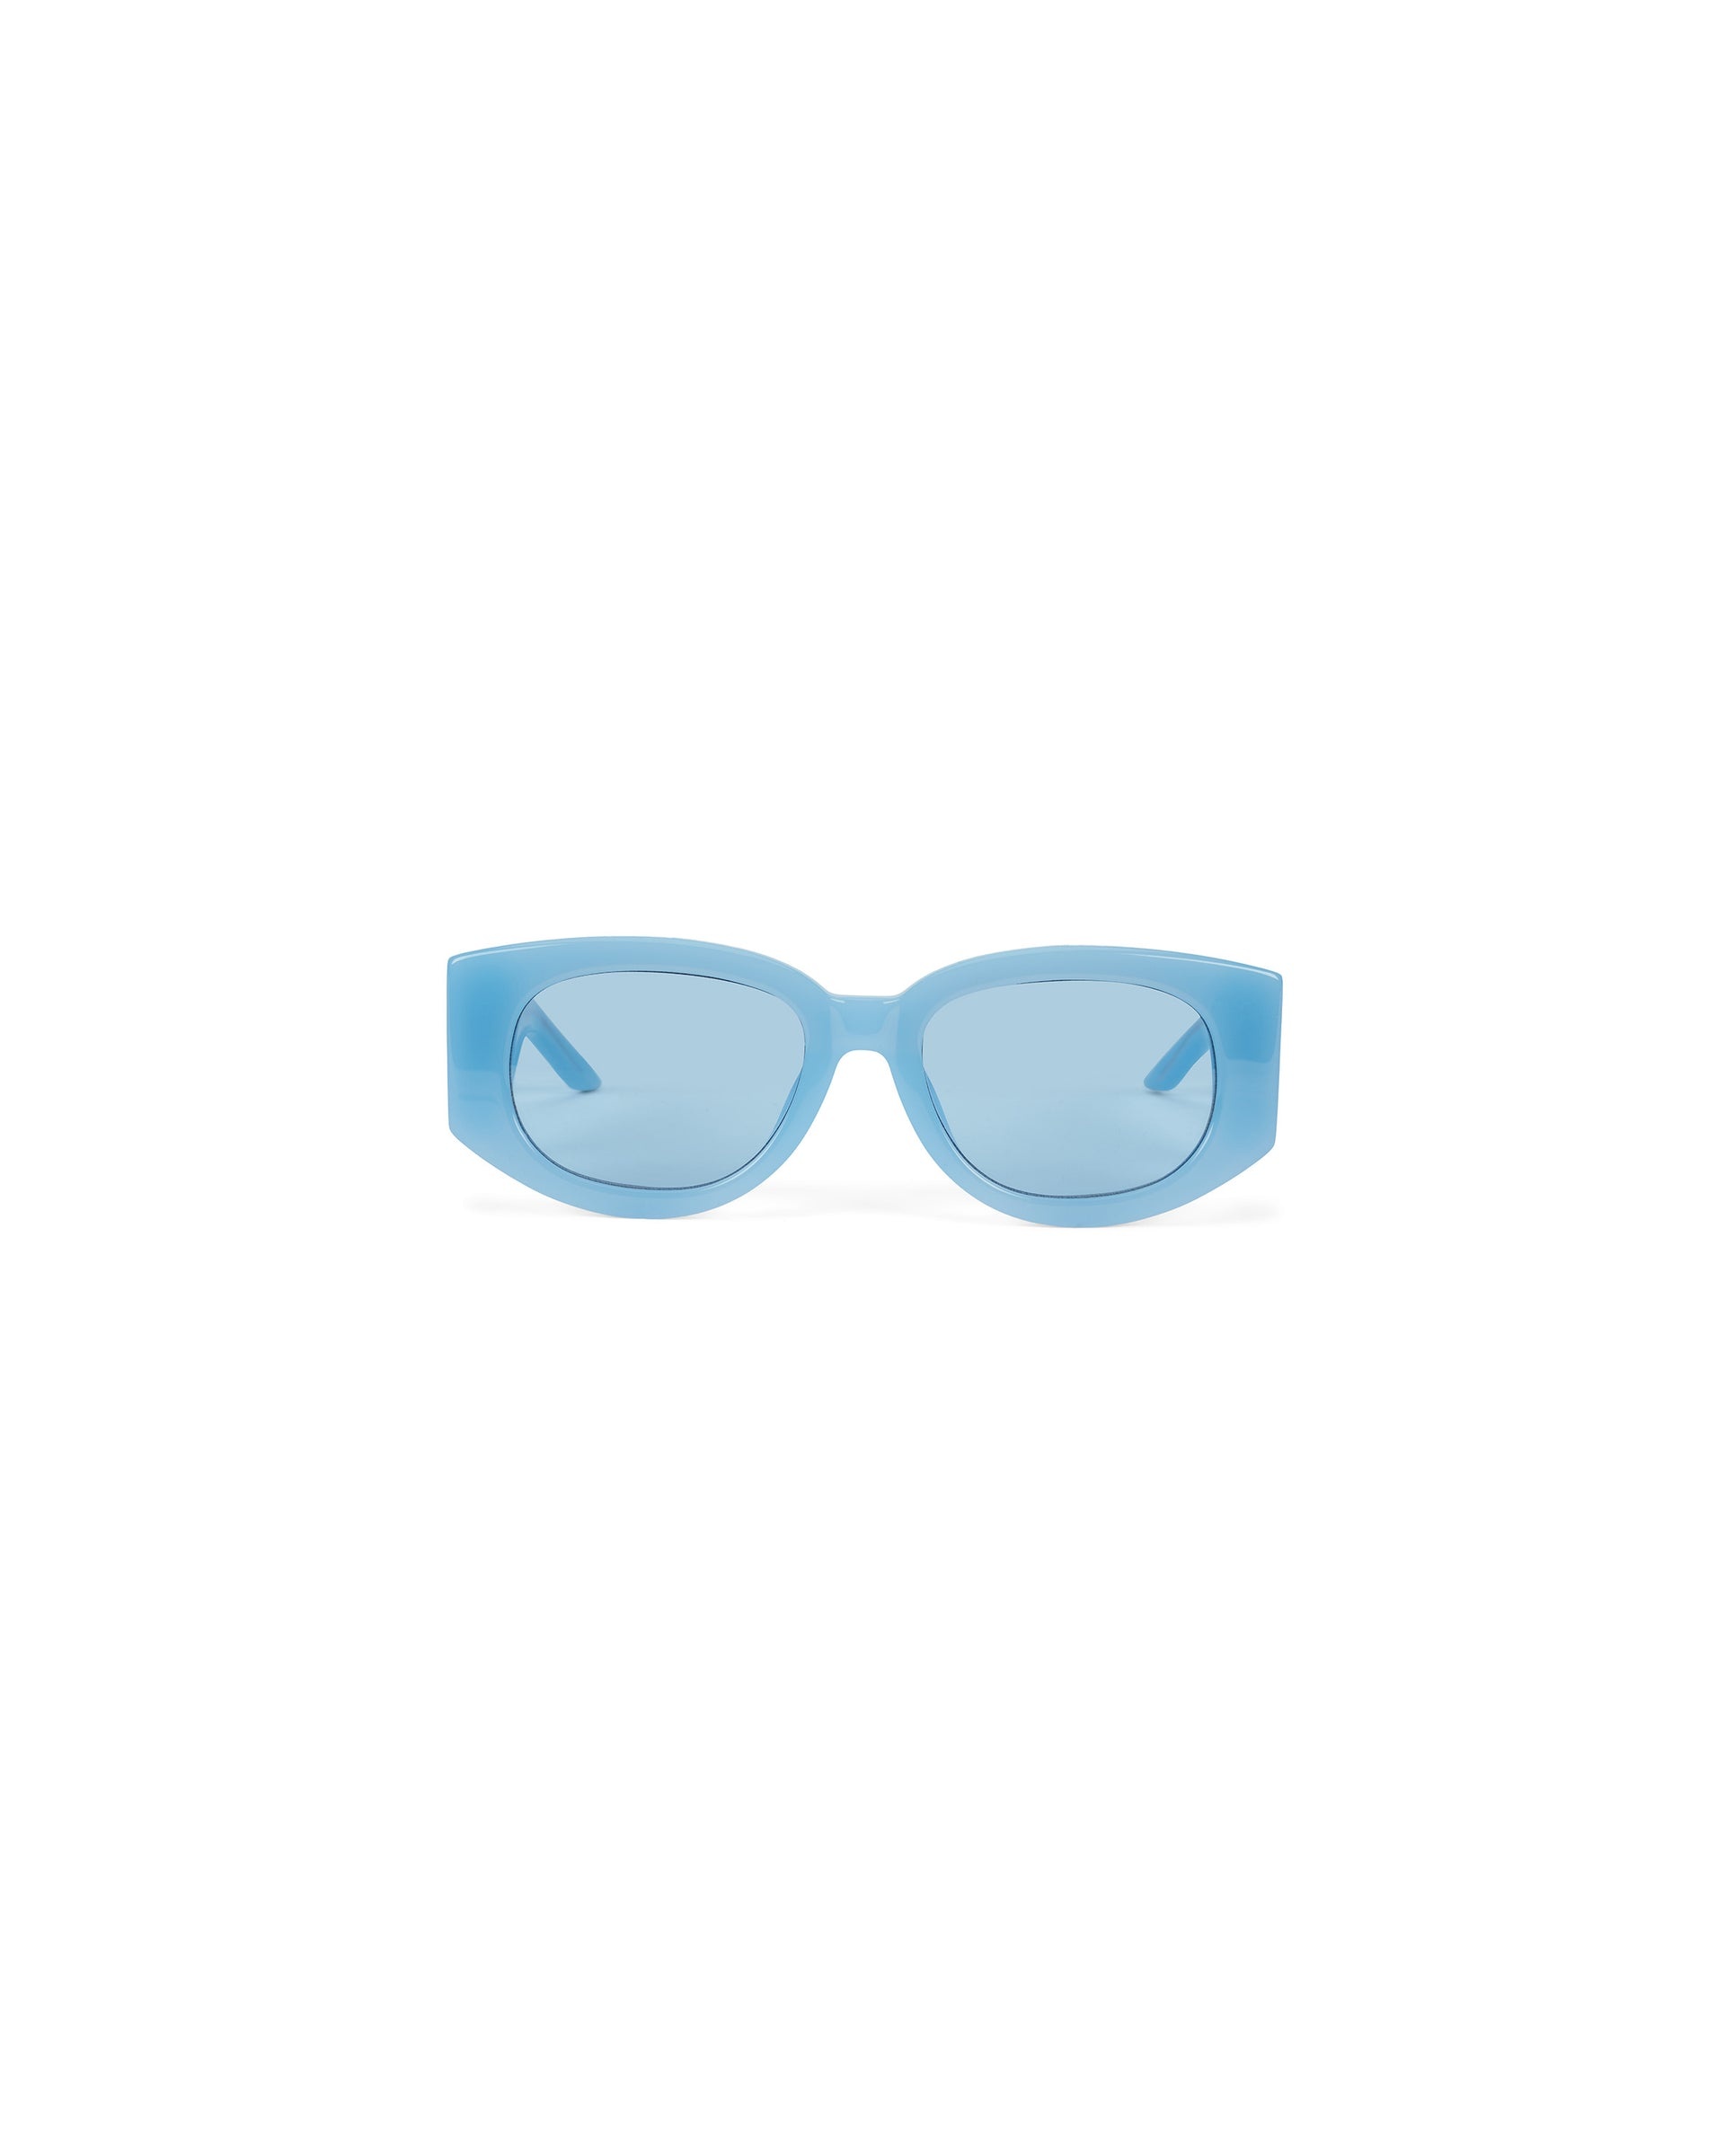 Blue & Gold Memphis Sunglasses - 2